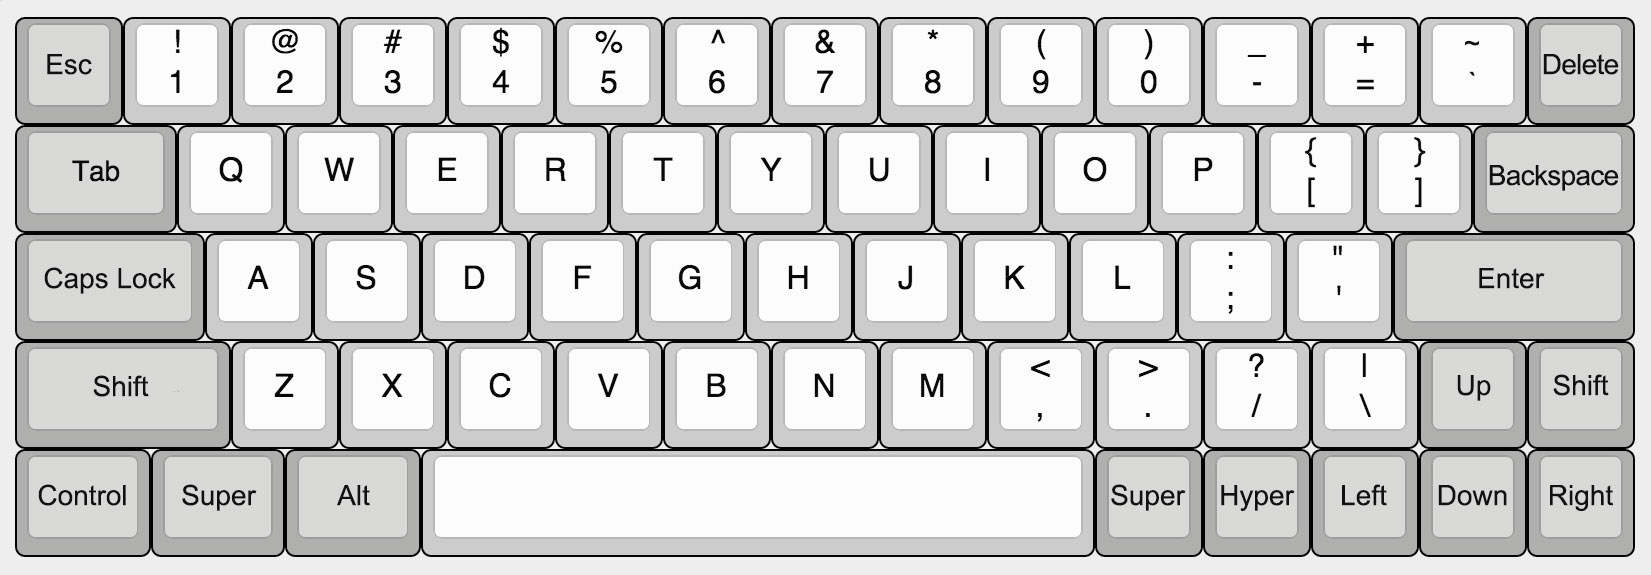 Illustration of keyboard layout